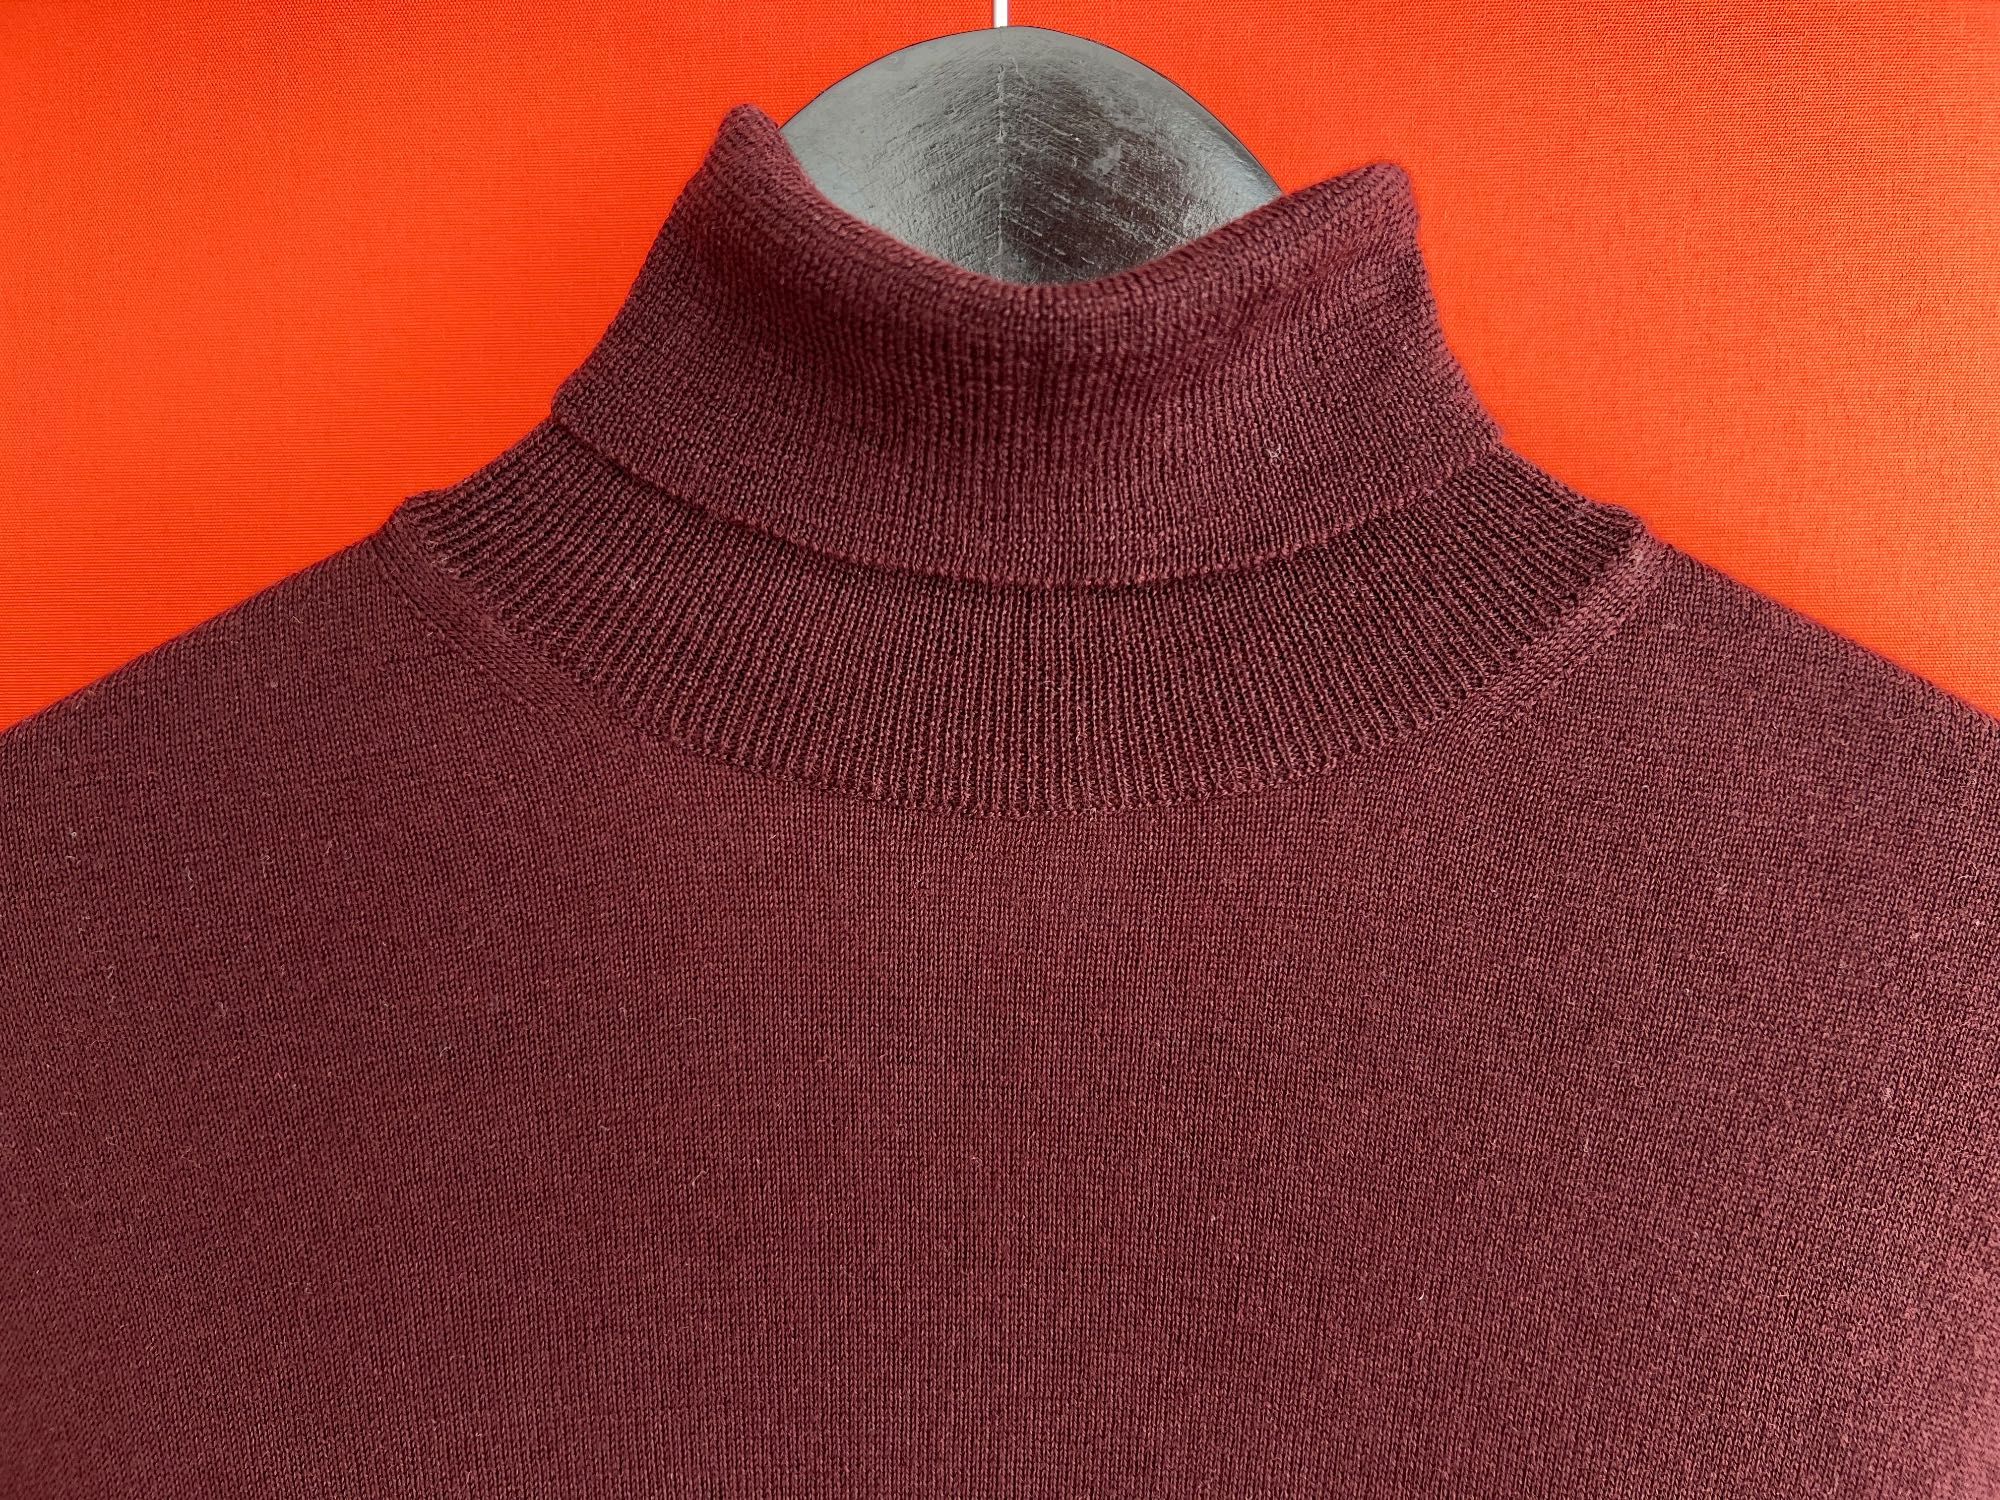 Zara Lana оригинал мужской свитер джемпер гольф кофта размер S M Б У